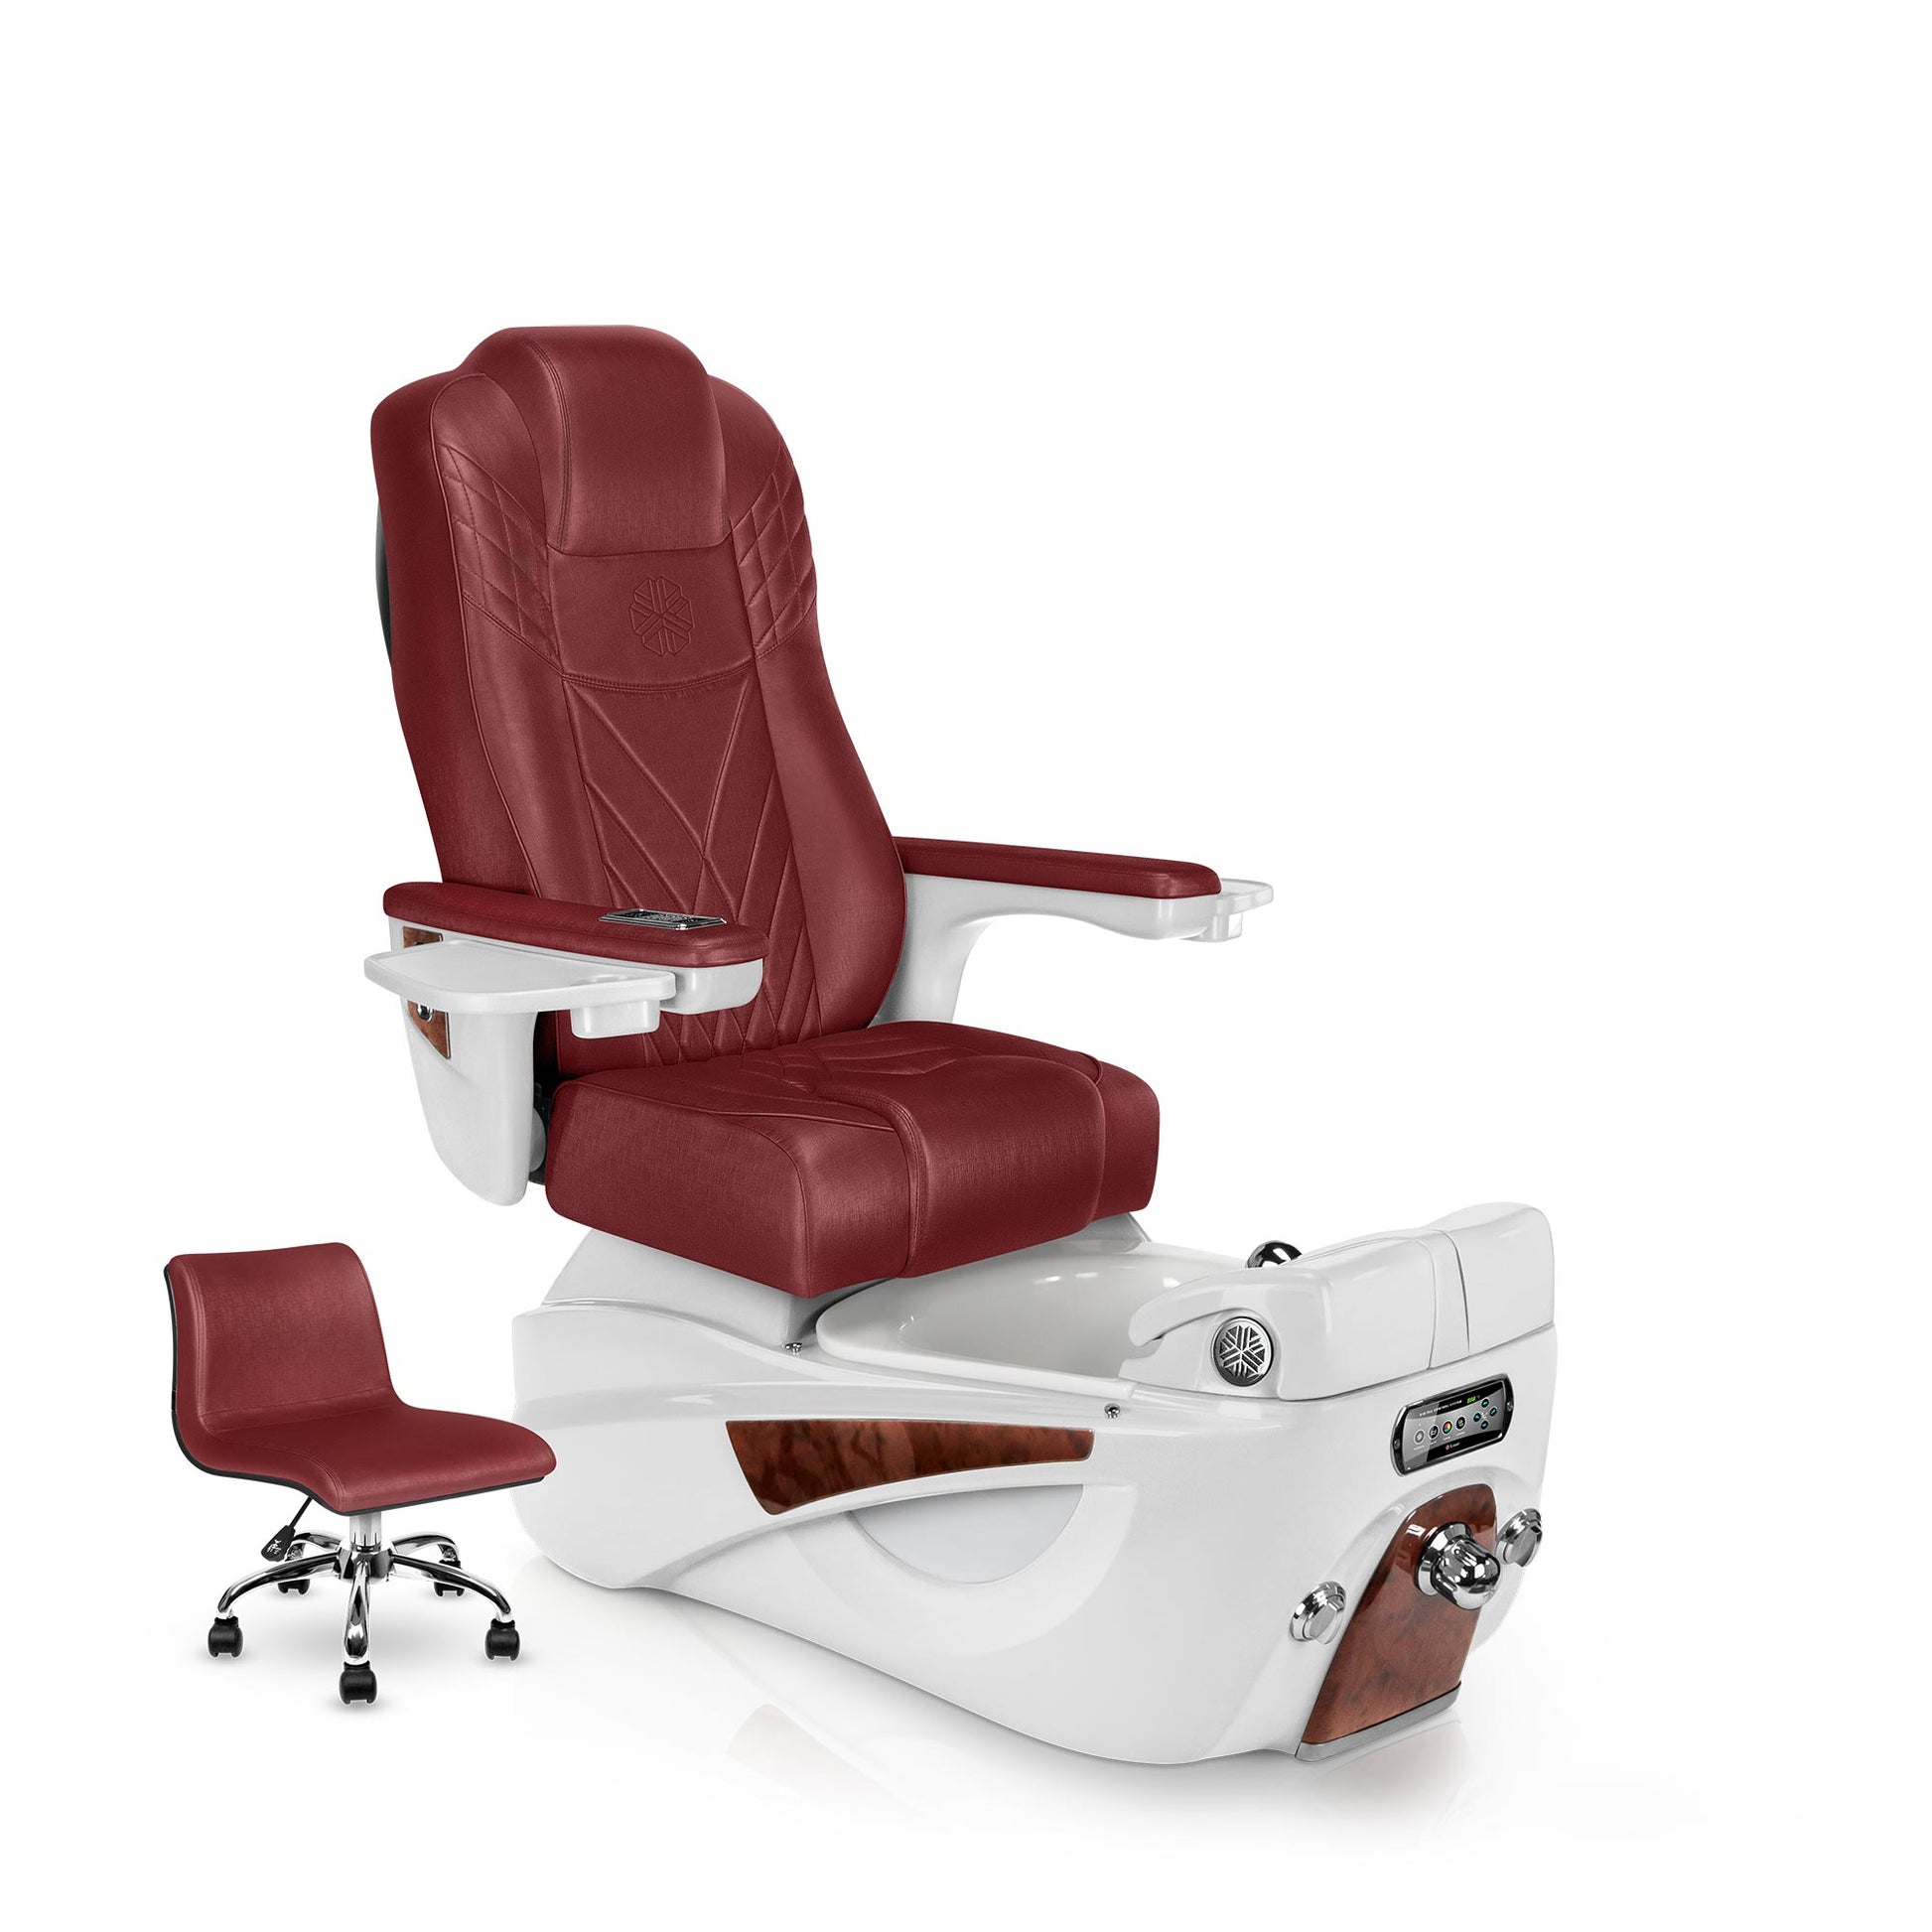 Lexor LUMINOUS pedicure chair with ruby cushion and white pearl spa base